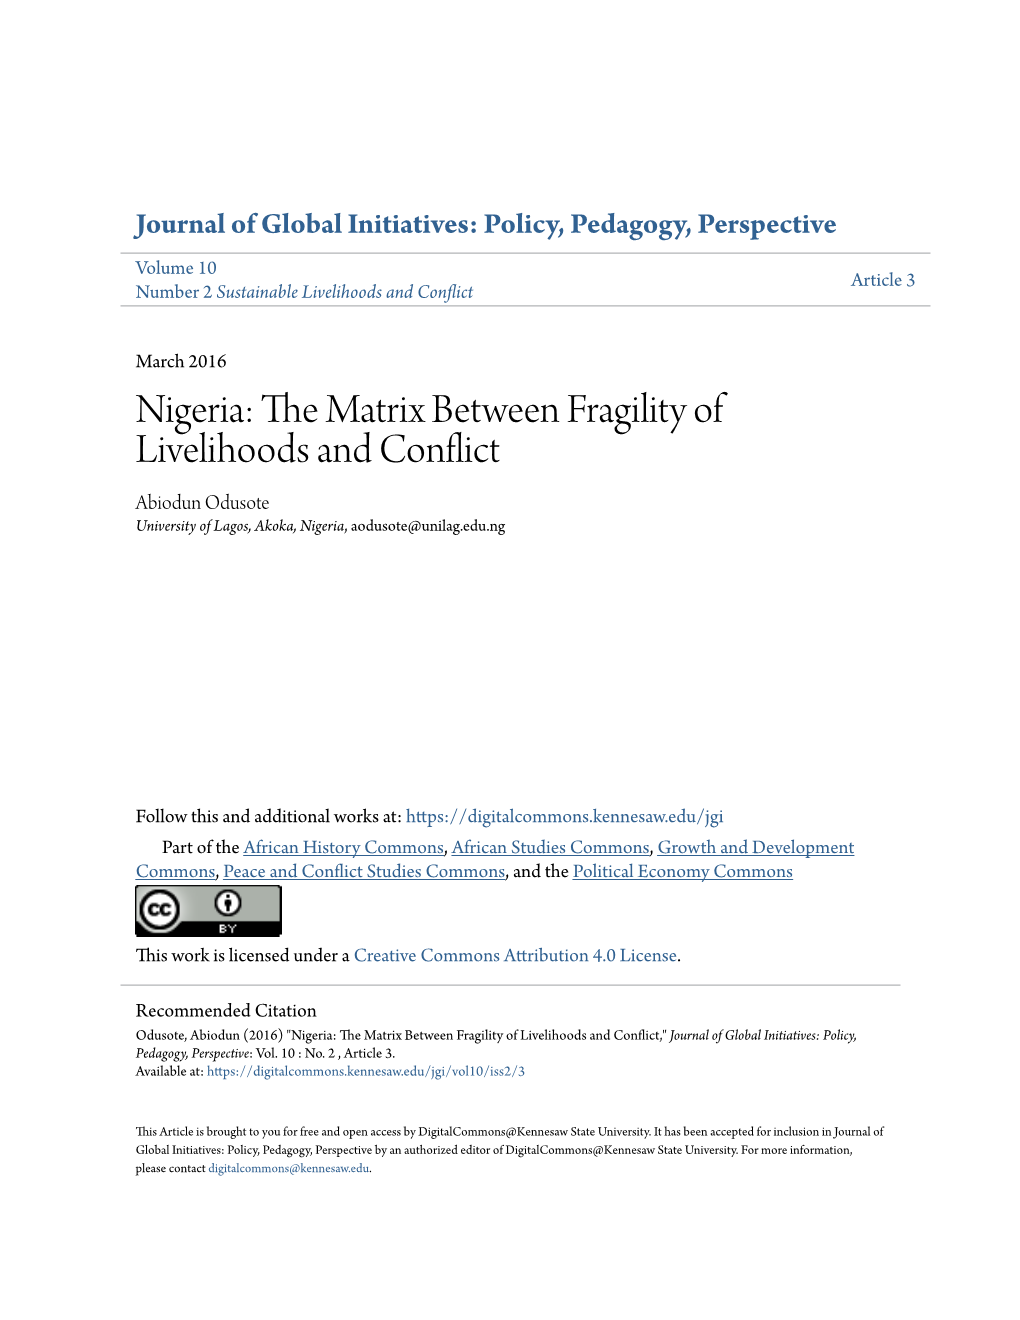 Nigeria: the Matrix Between Fragility of Livelihoods and Conflict